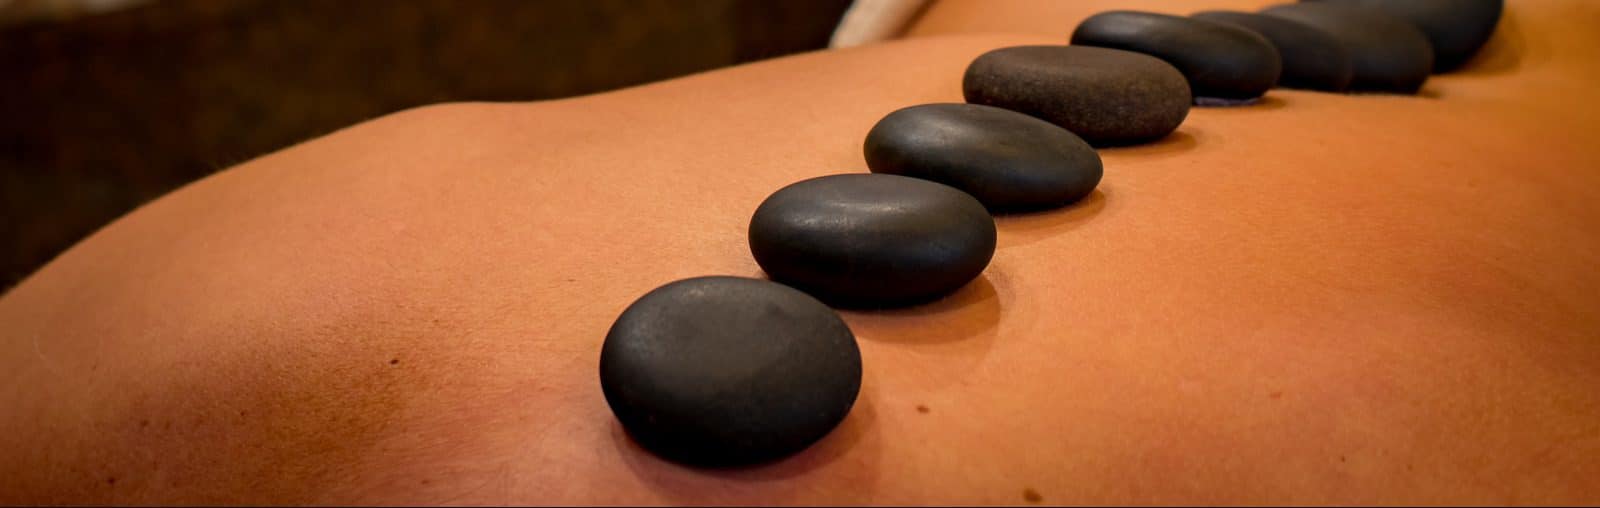 Hot Stones Massage | Phoenix Health And Wellbeing